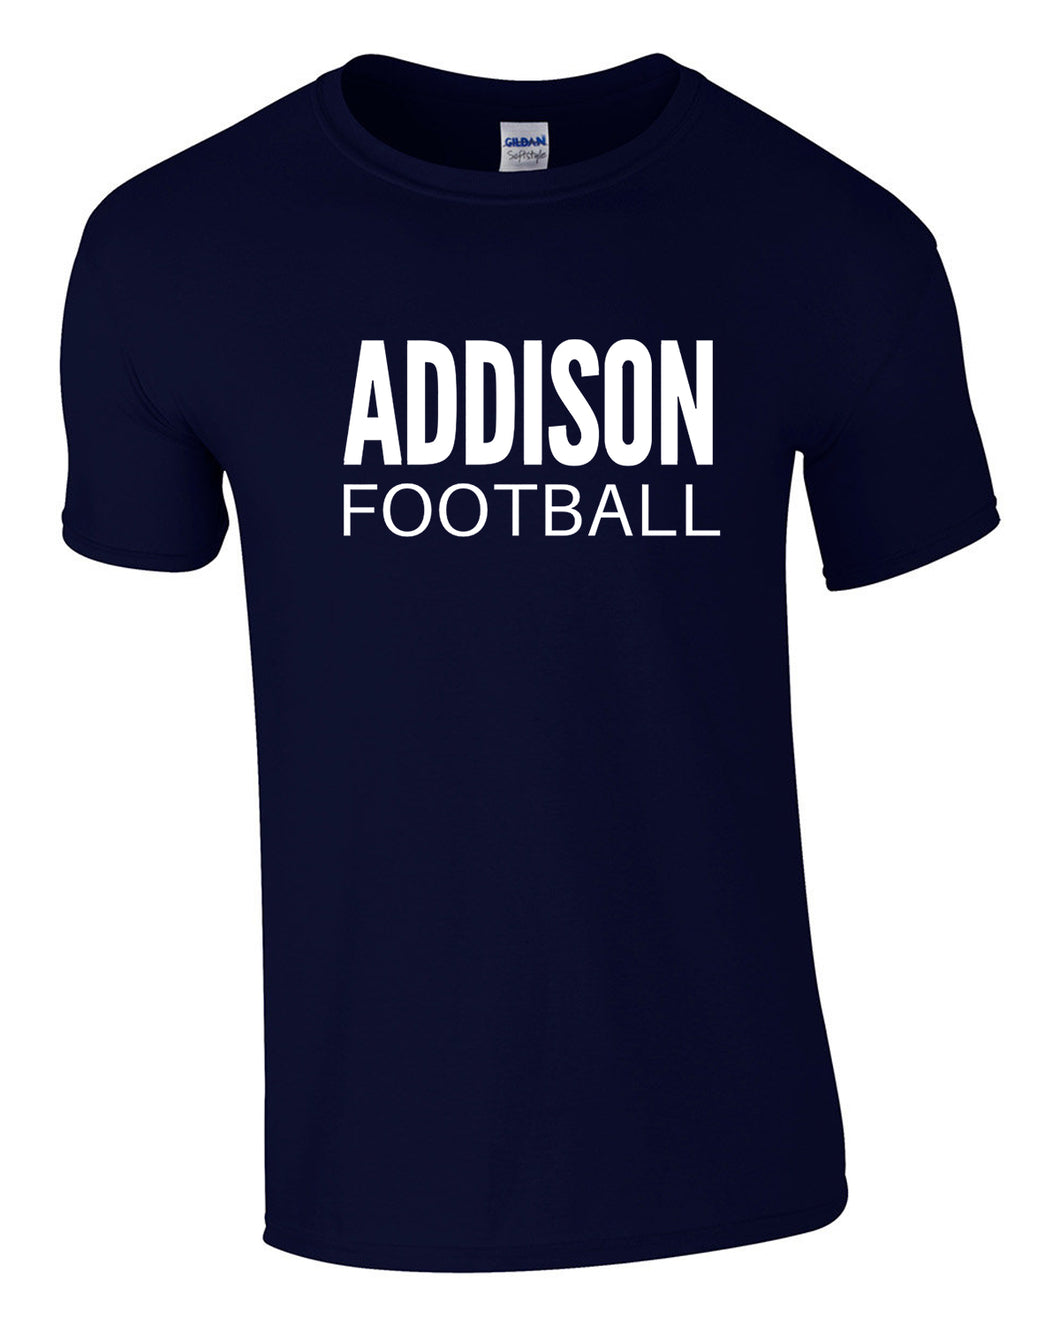 Addison Football T-shirt - ADULT